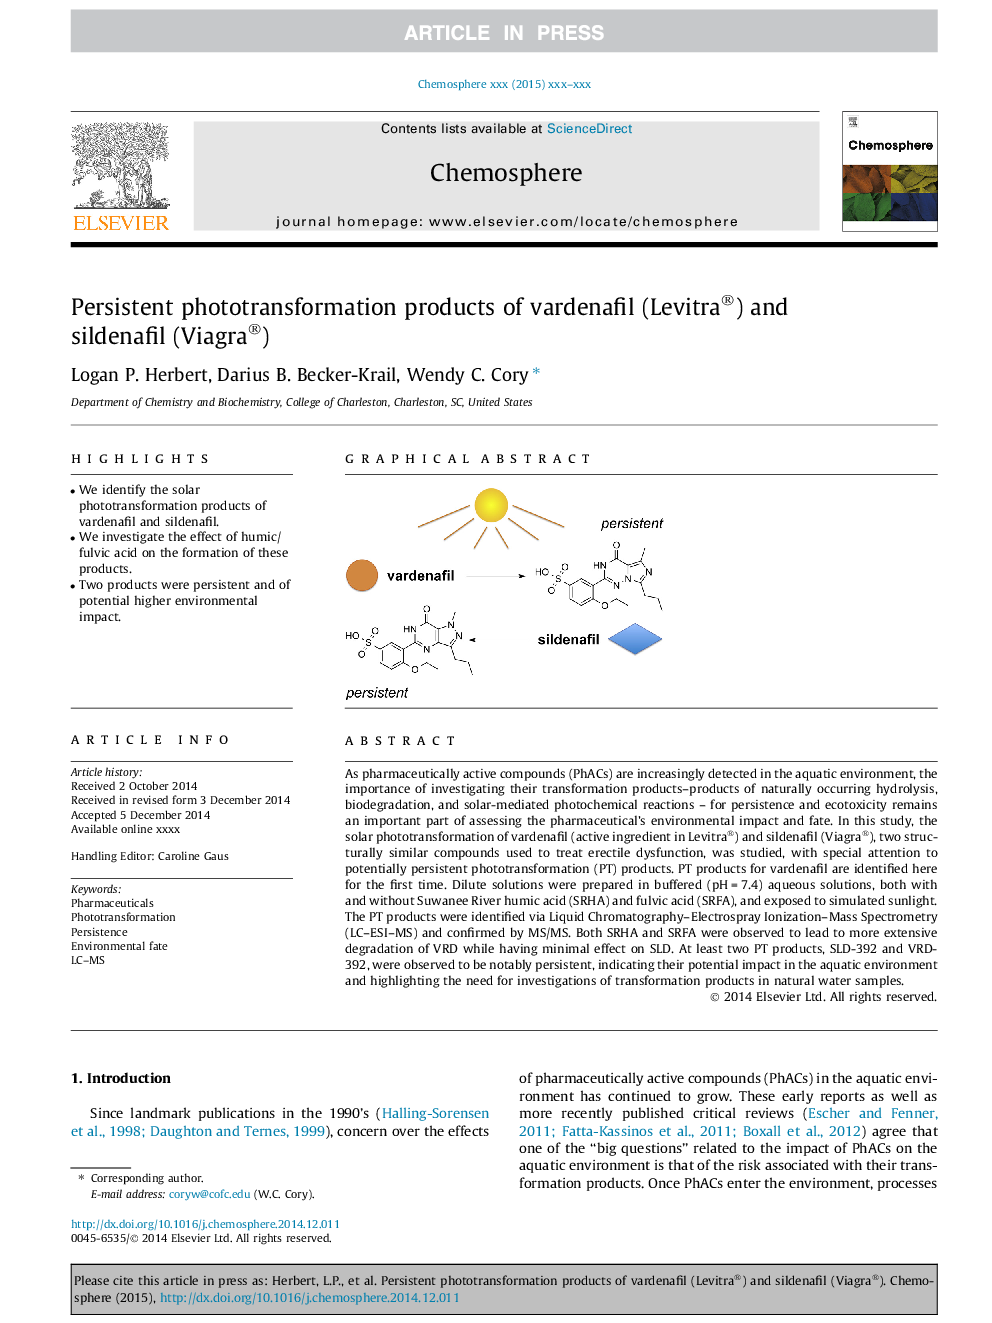 Persistent phototransformation products of vardenafil (Levitra®) and sildenafil (Viagra®)